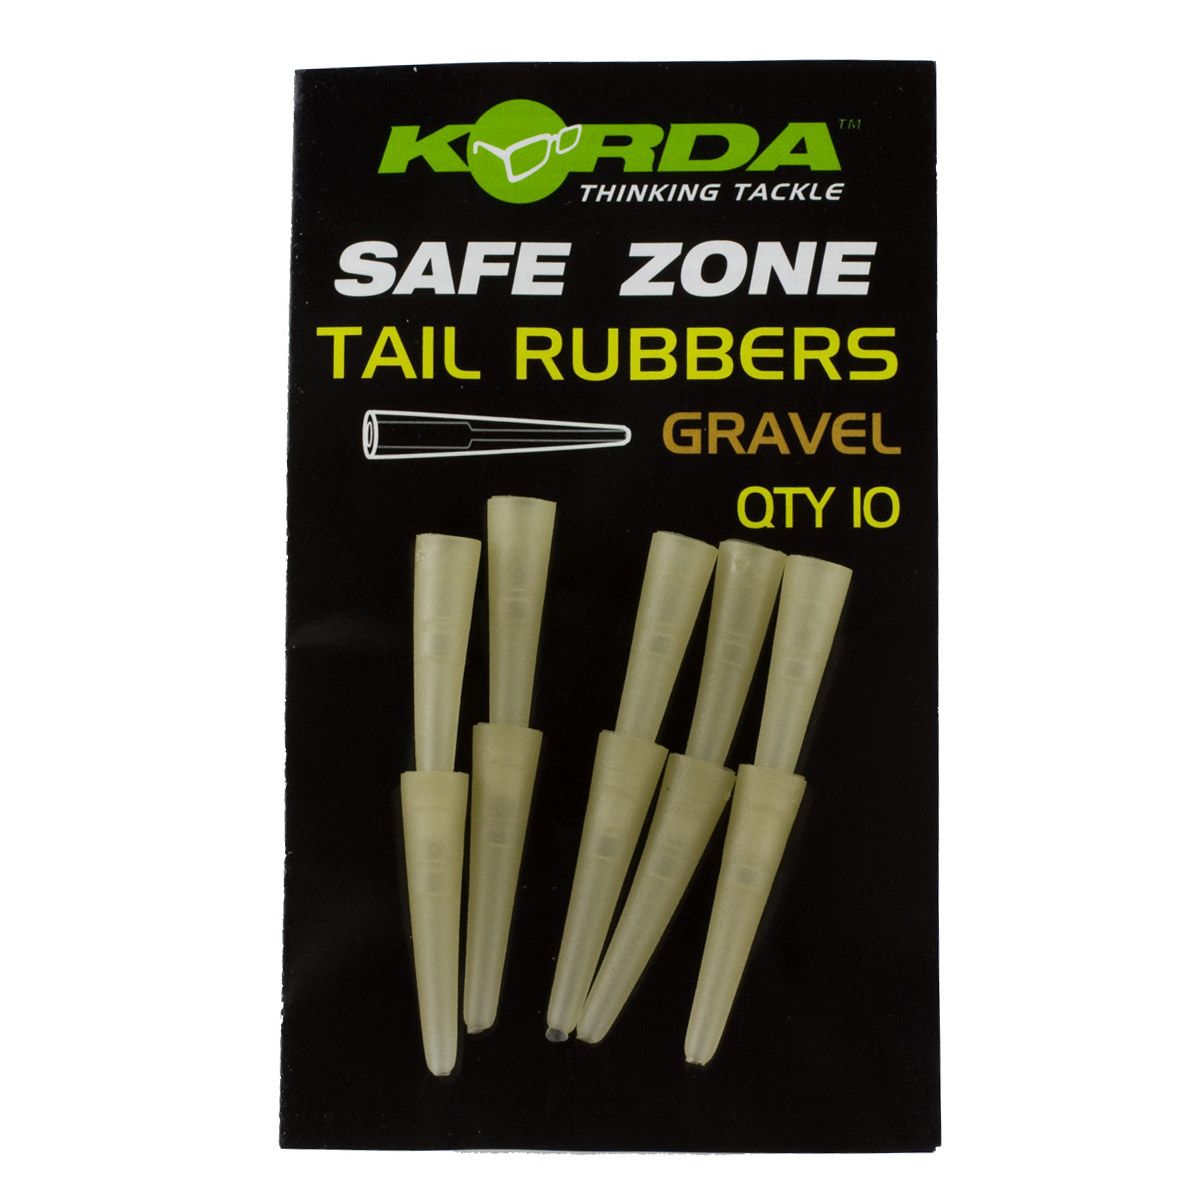 Korda Safe Zone Tail Rubbers -  Gravel